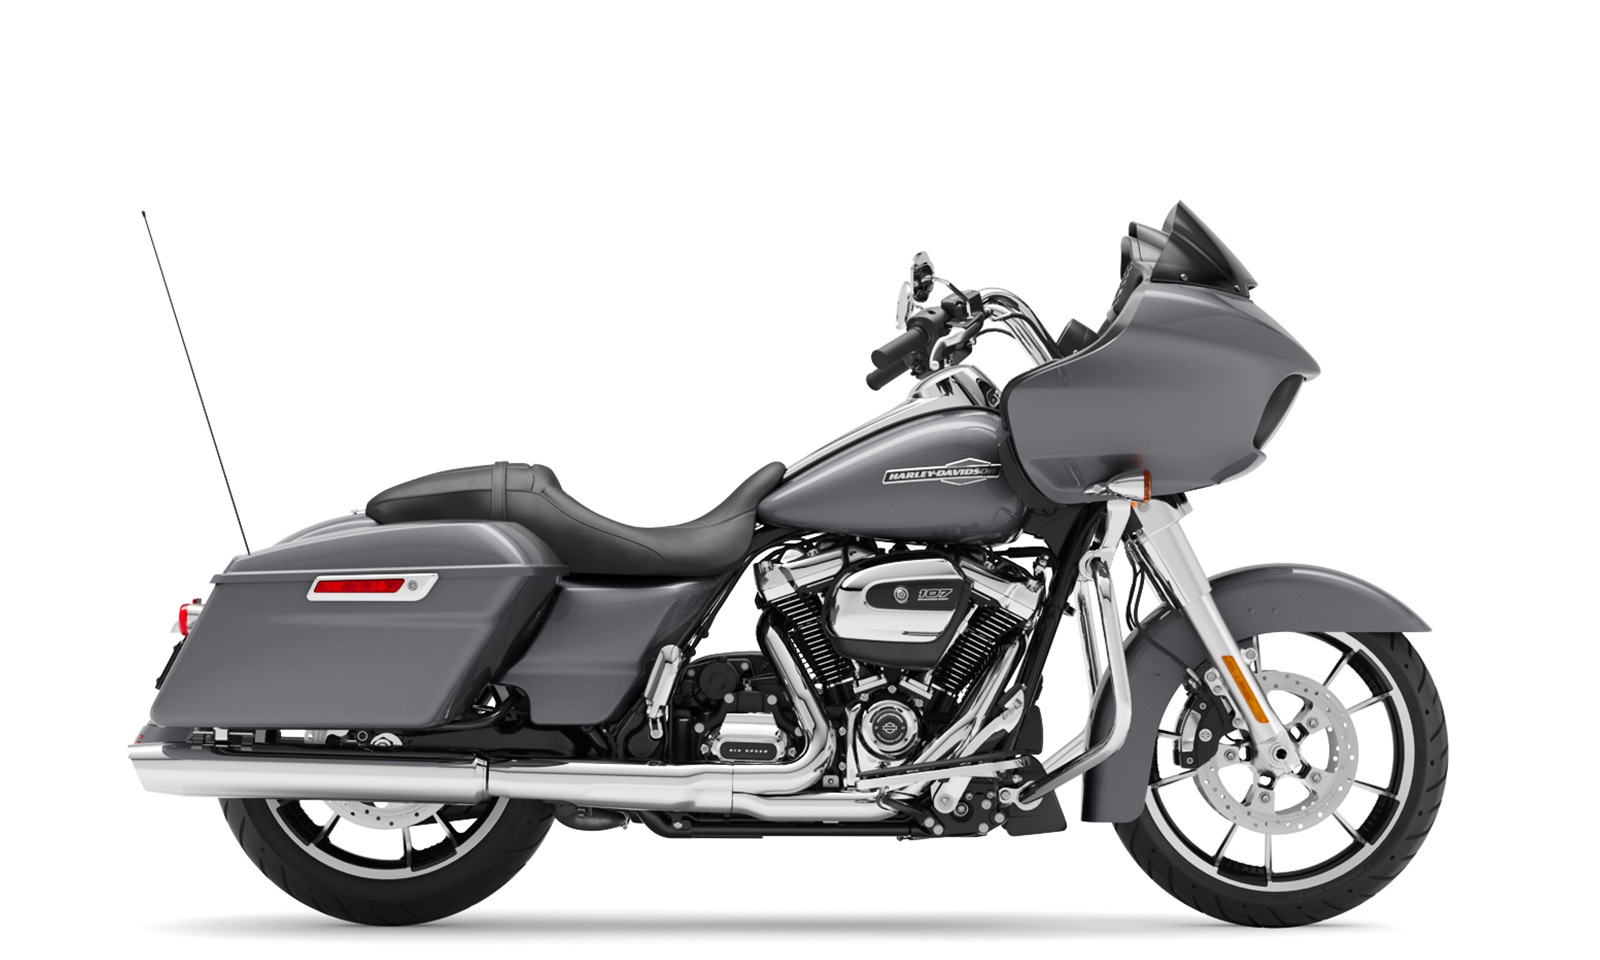 2021 Road Glide Motorcycle | Harley-Davidson USA